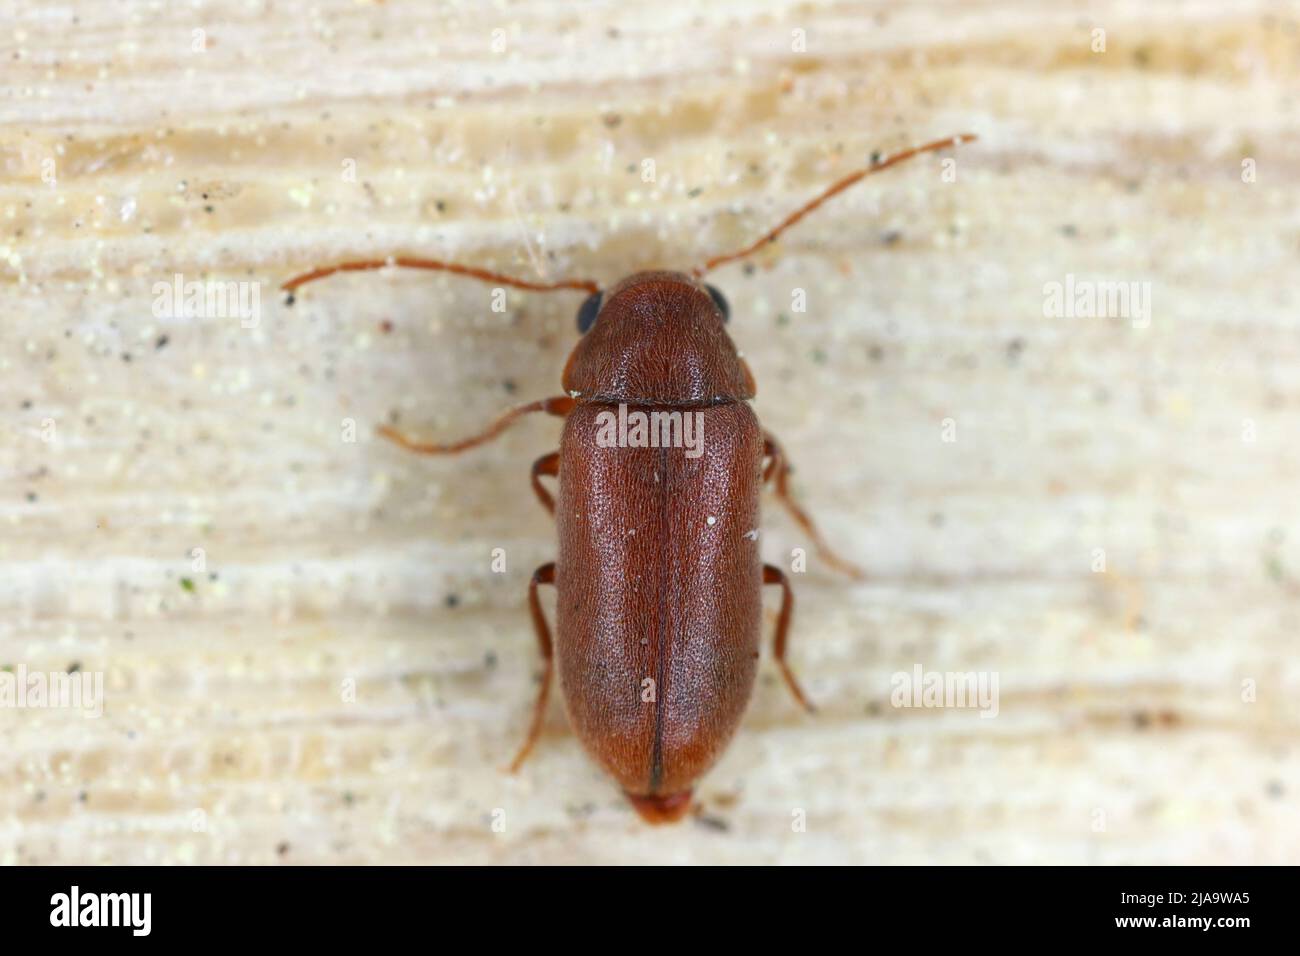 Woodboring beetle, wood borer, Anobiidae (Ernobius) on wood. High magnification. Stock Photo